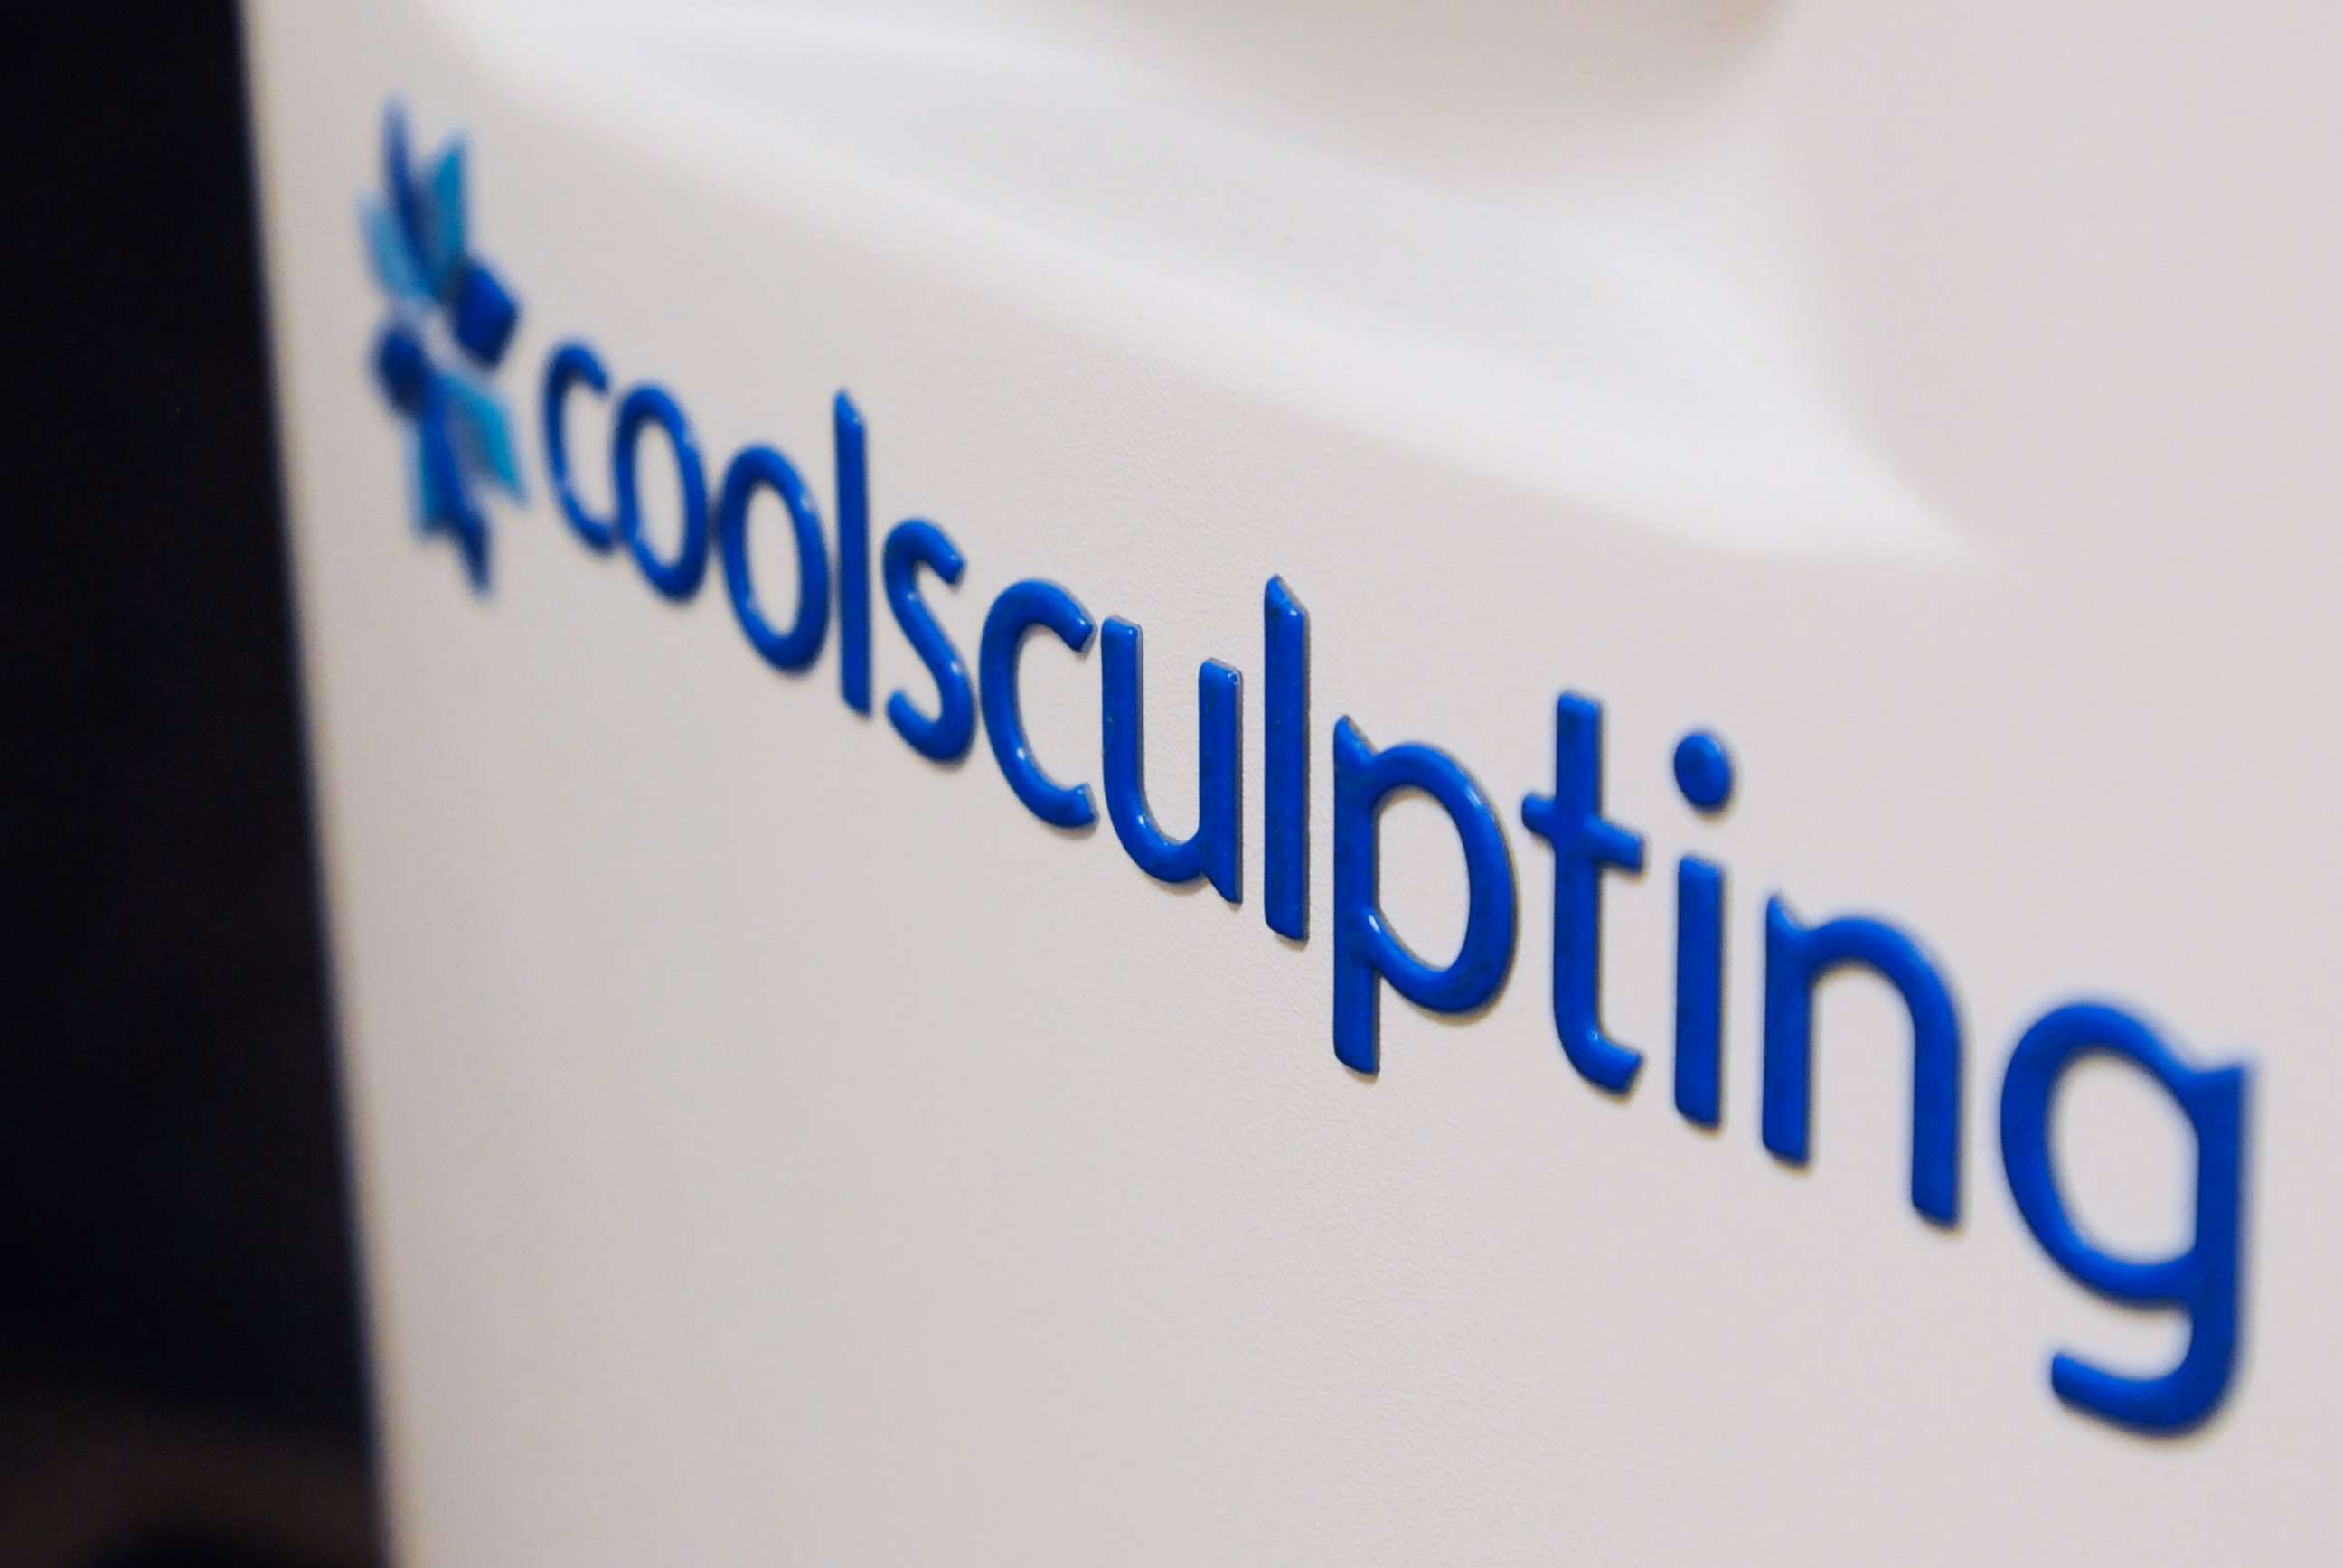 PHOTO: Coolsculpting logo on a machine.